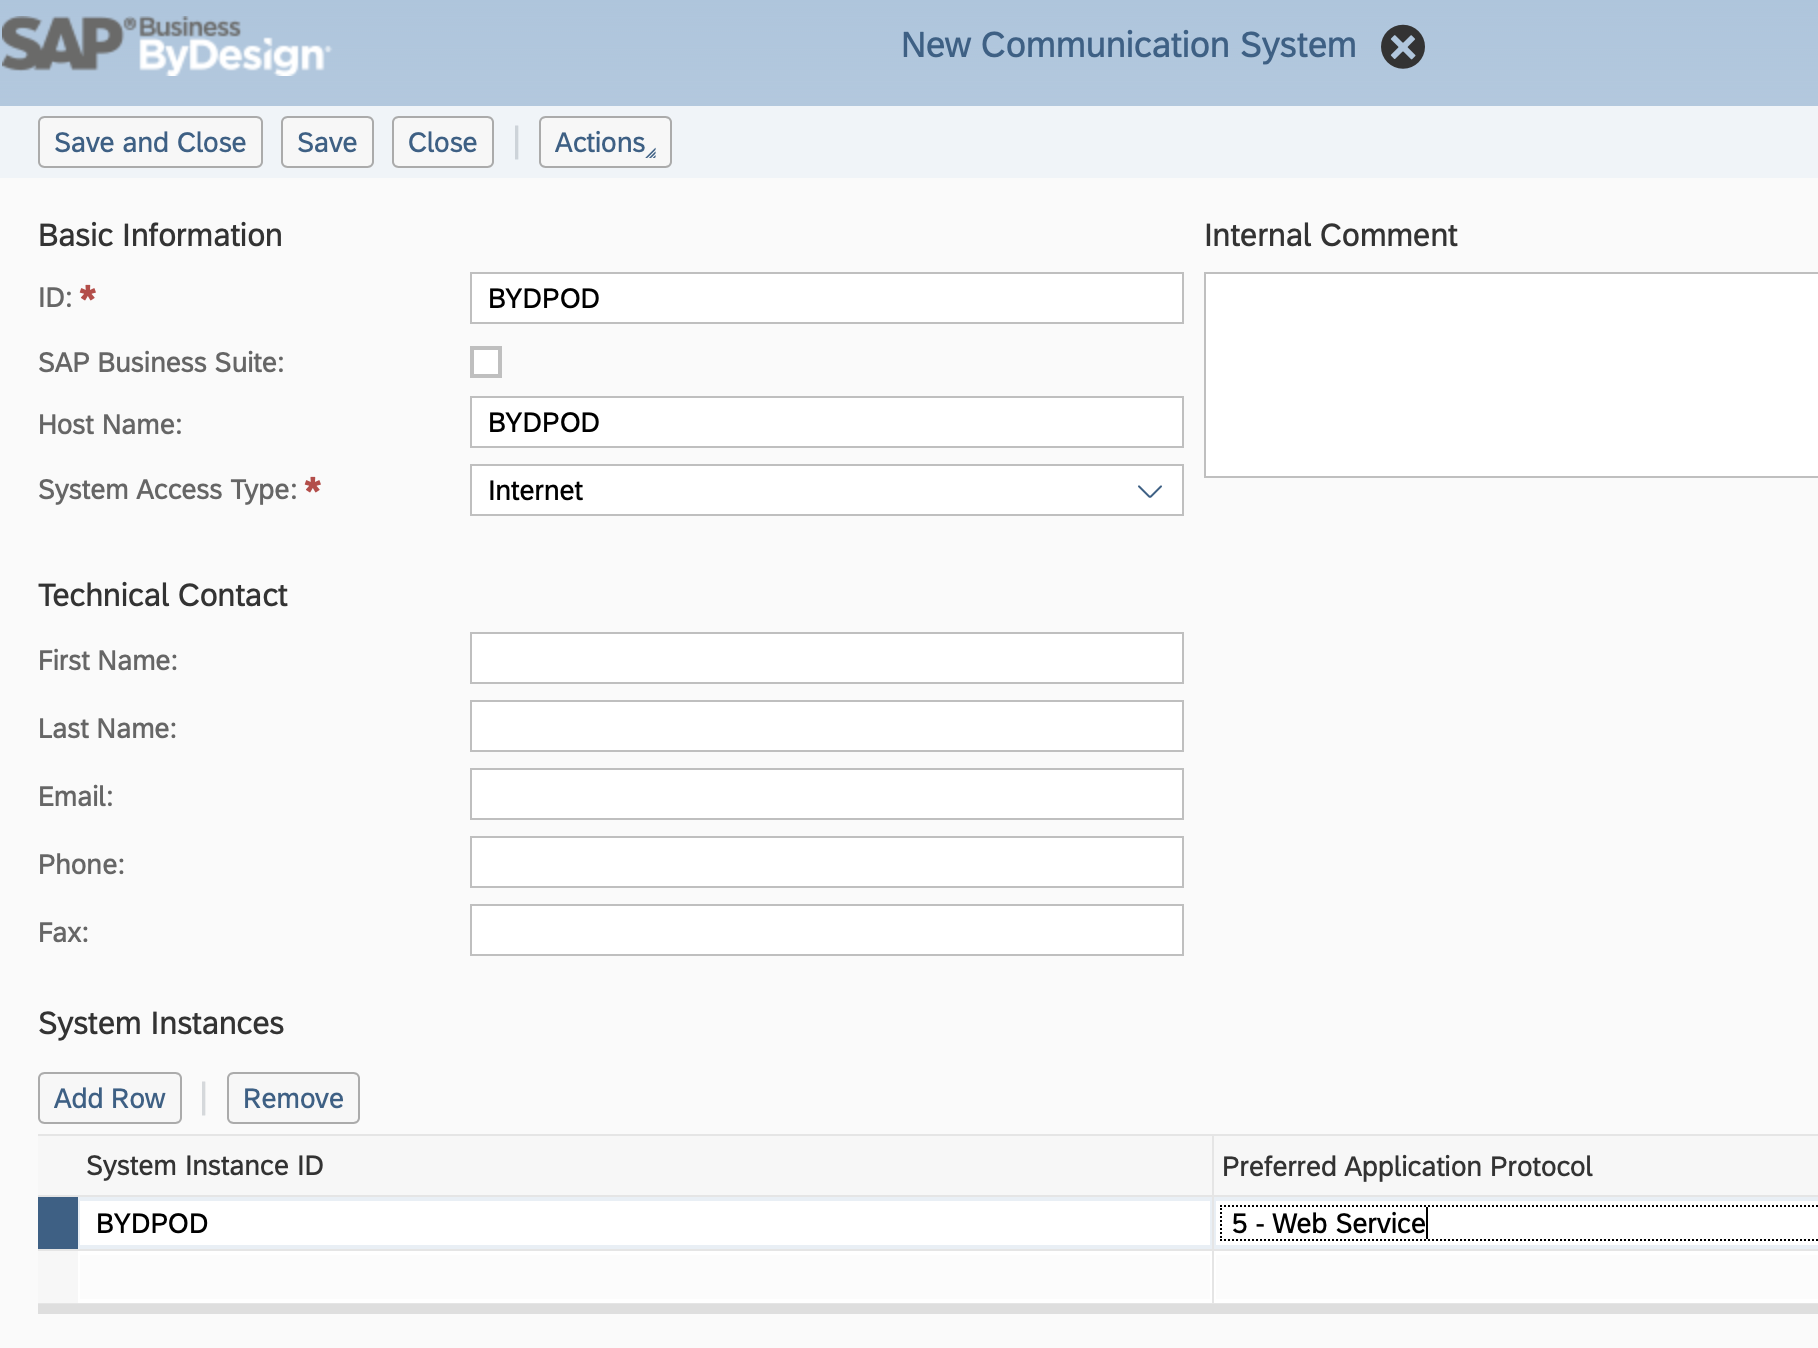 SAP Business ByDesign Communication System